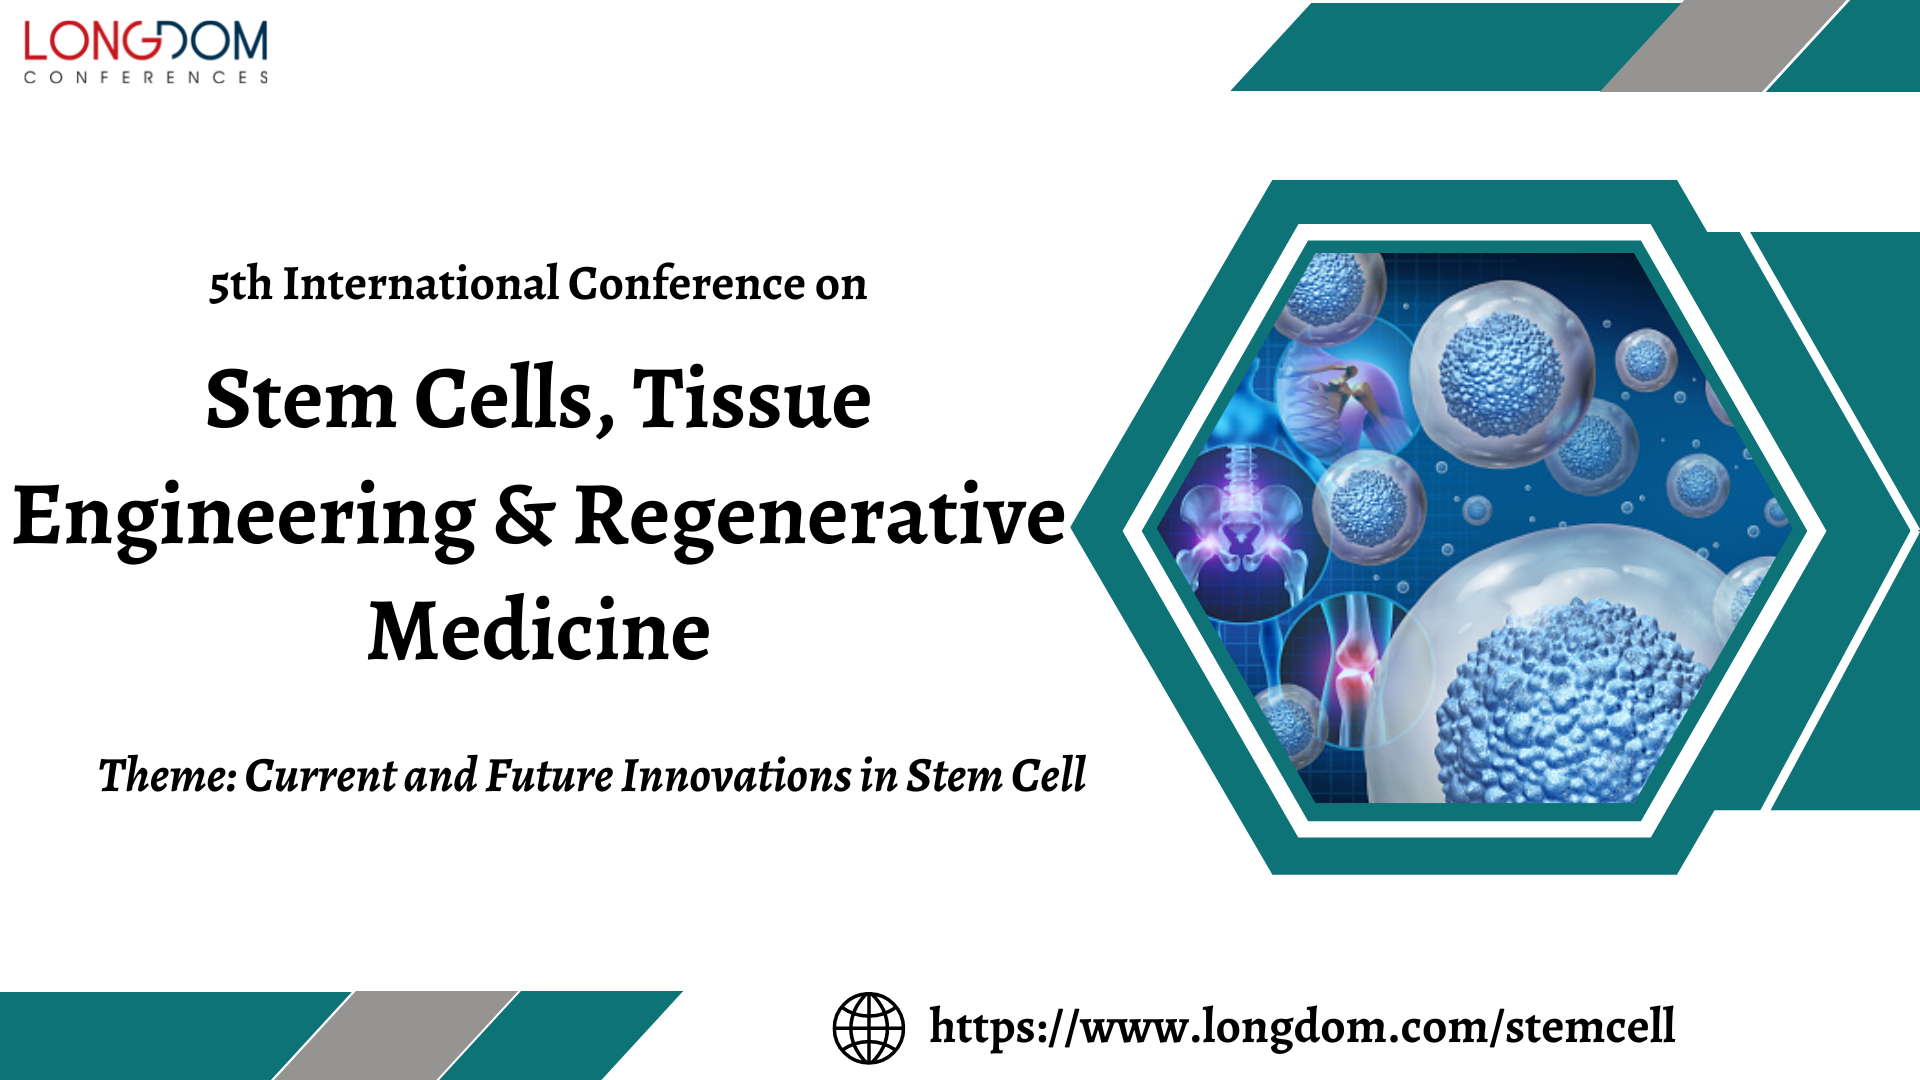 Official Announcement of Stem Cells 2023 Conference LONGDOM Conferences